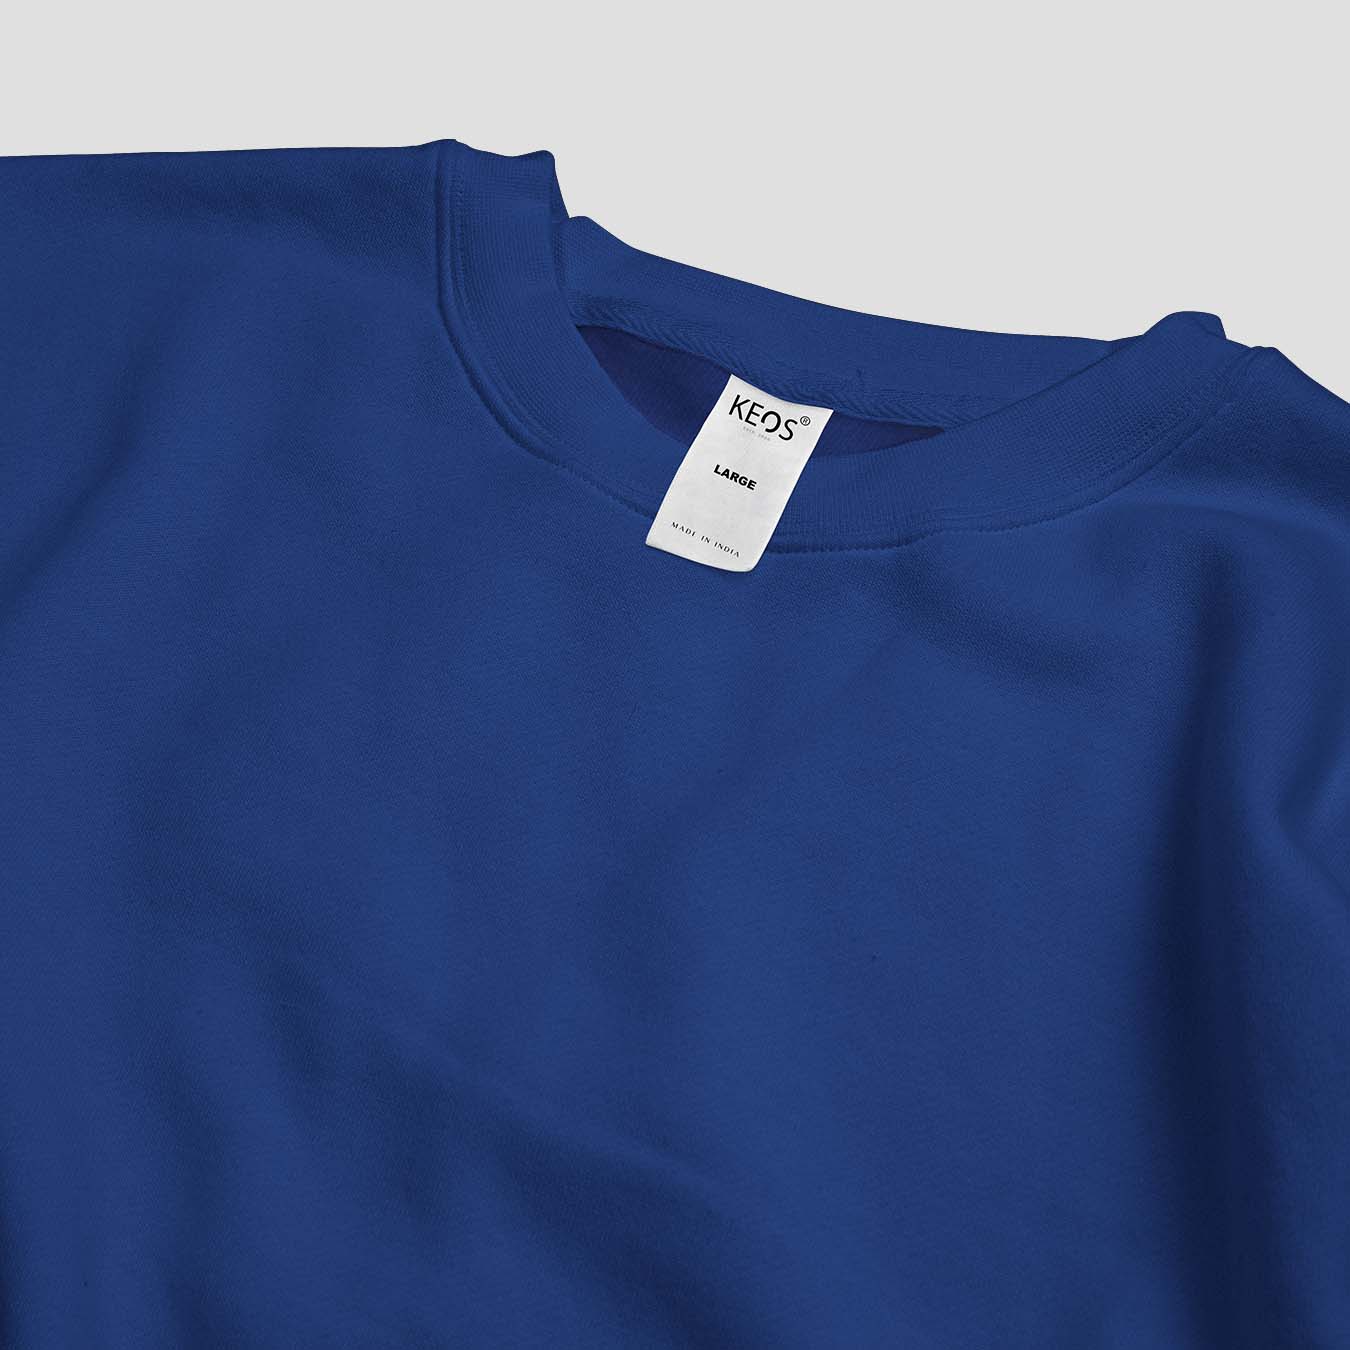 Essential Crewneck Sweatshirt - Navy Blue - keos.life